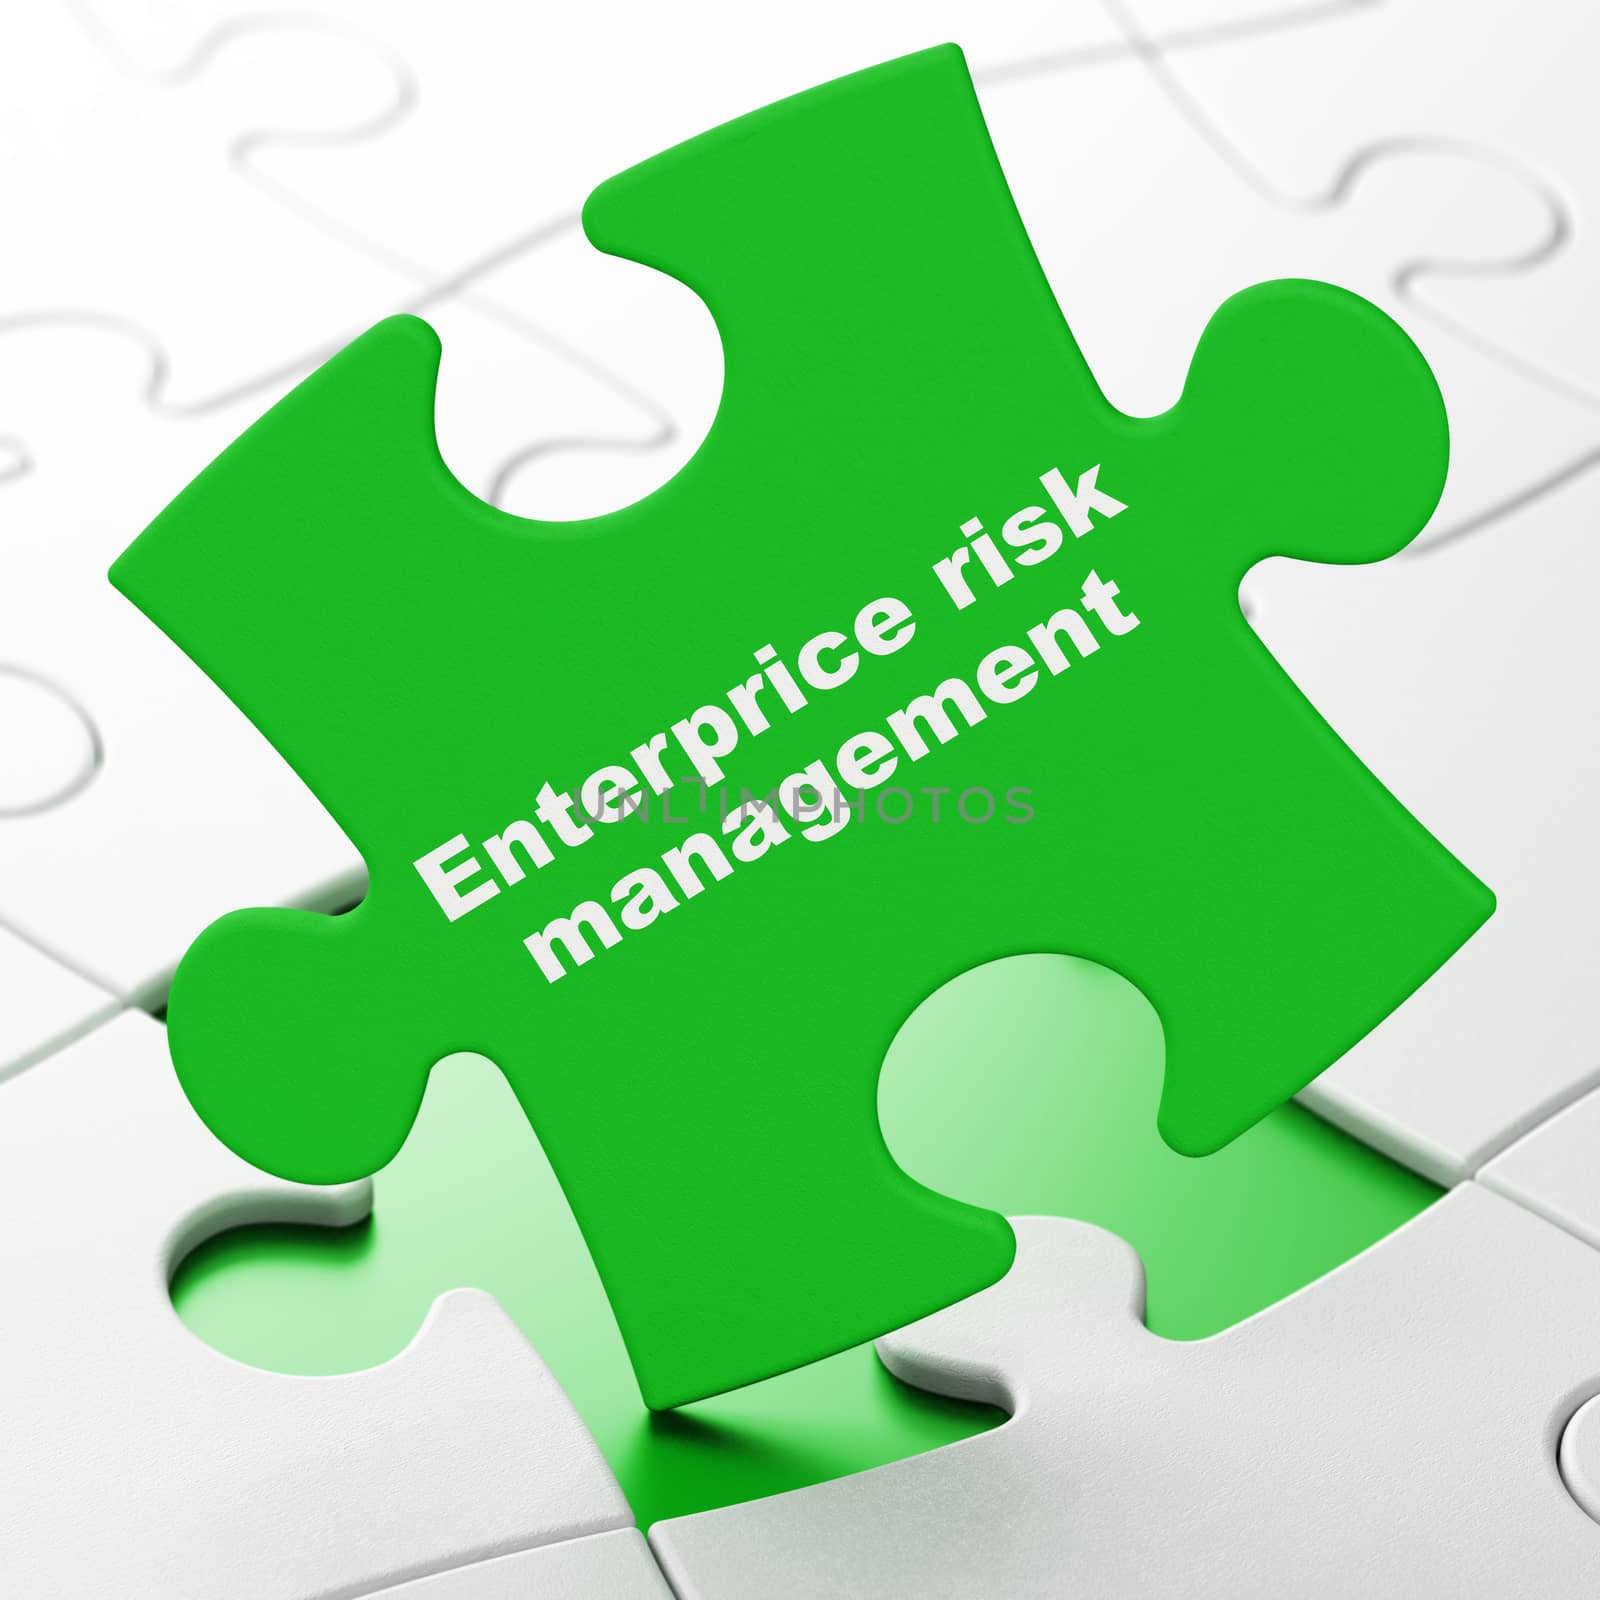 Business concept: Enterprice Risk Management on Green puzzle pieces background, 3D rendering